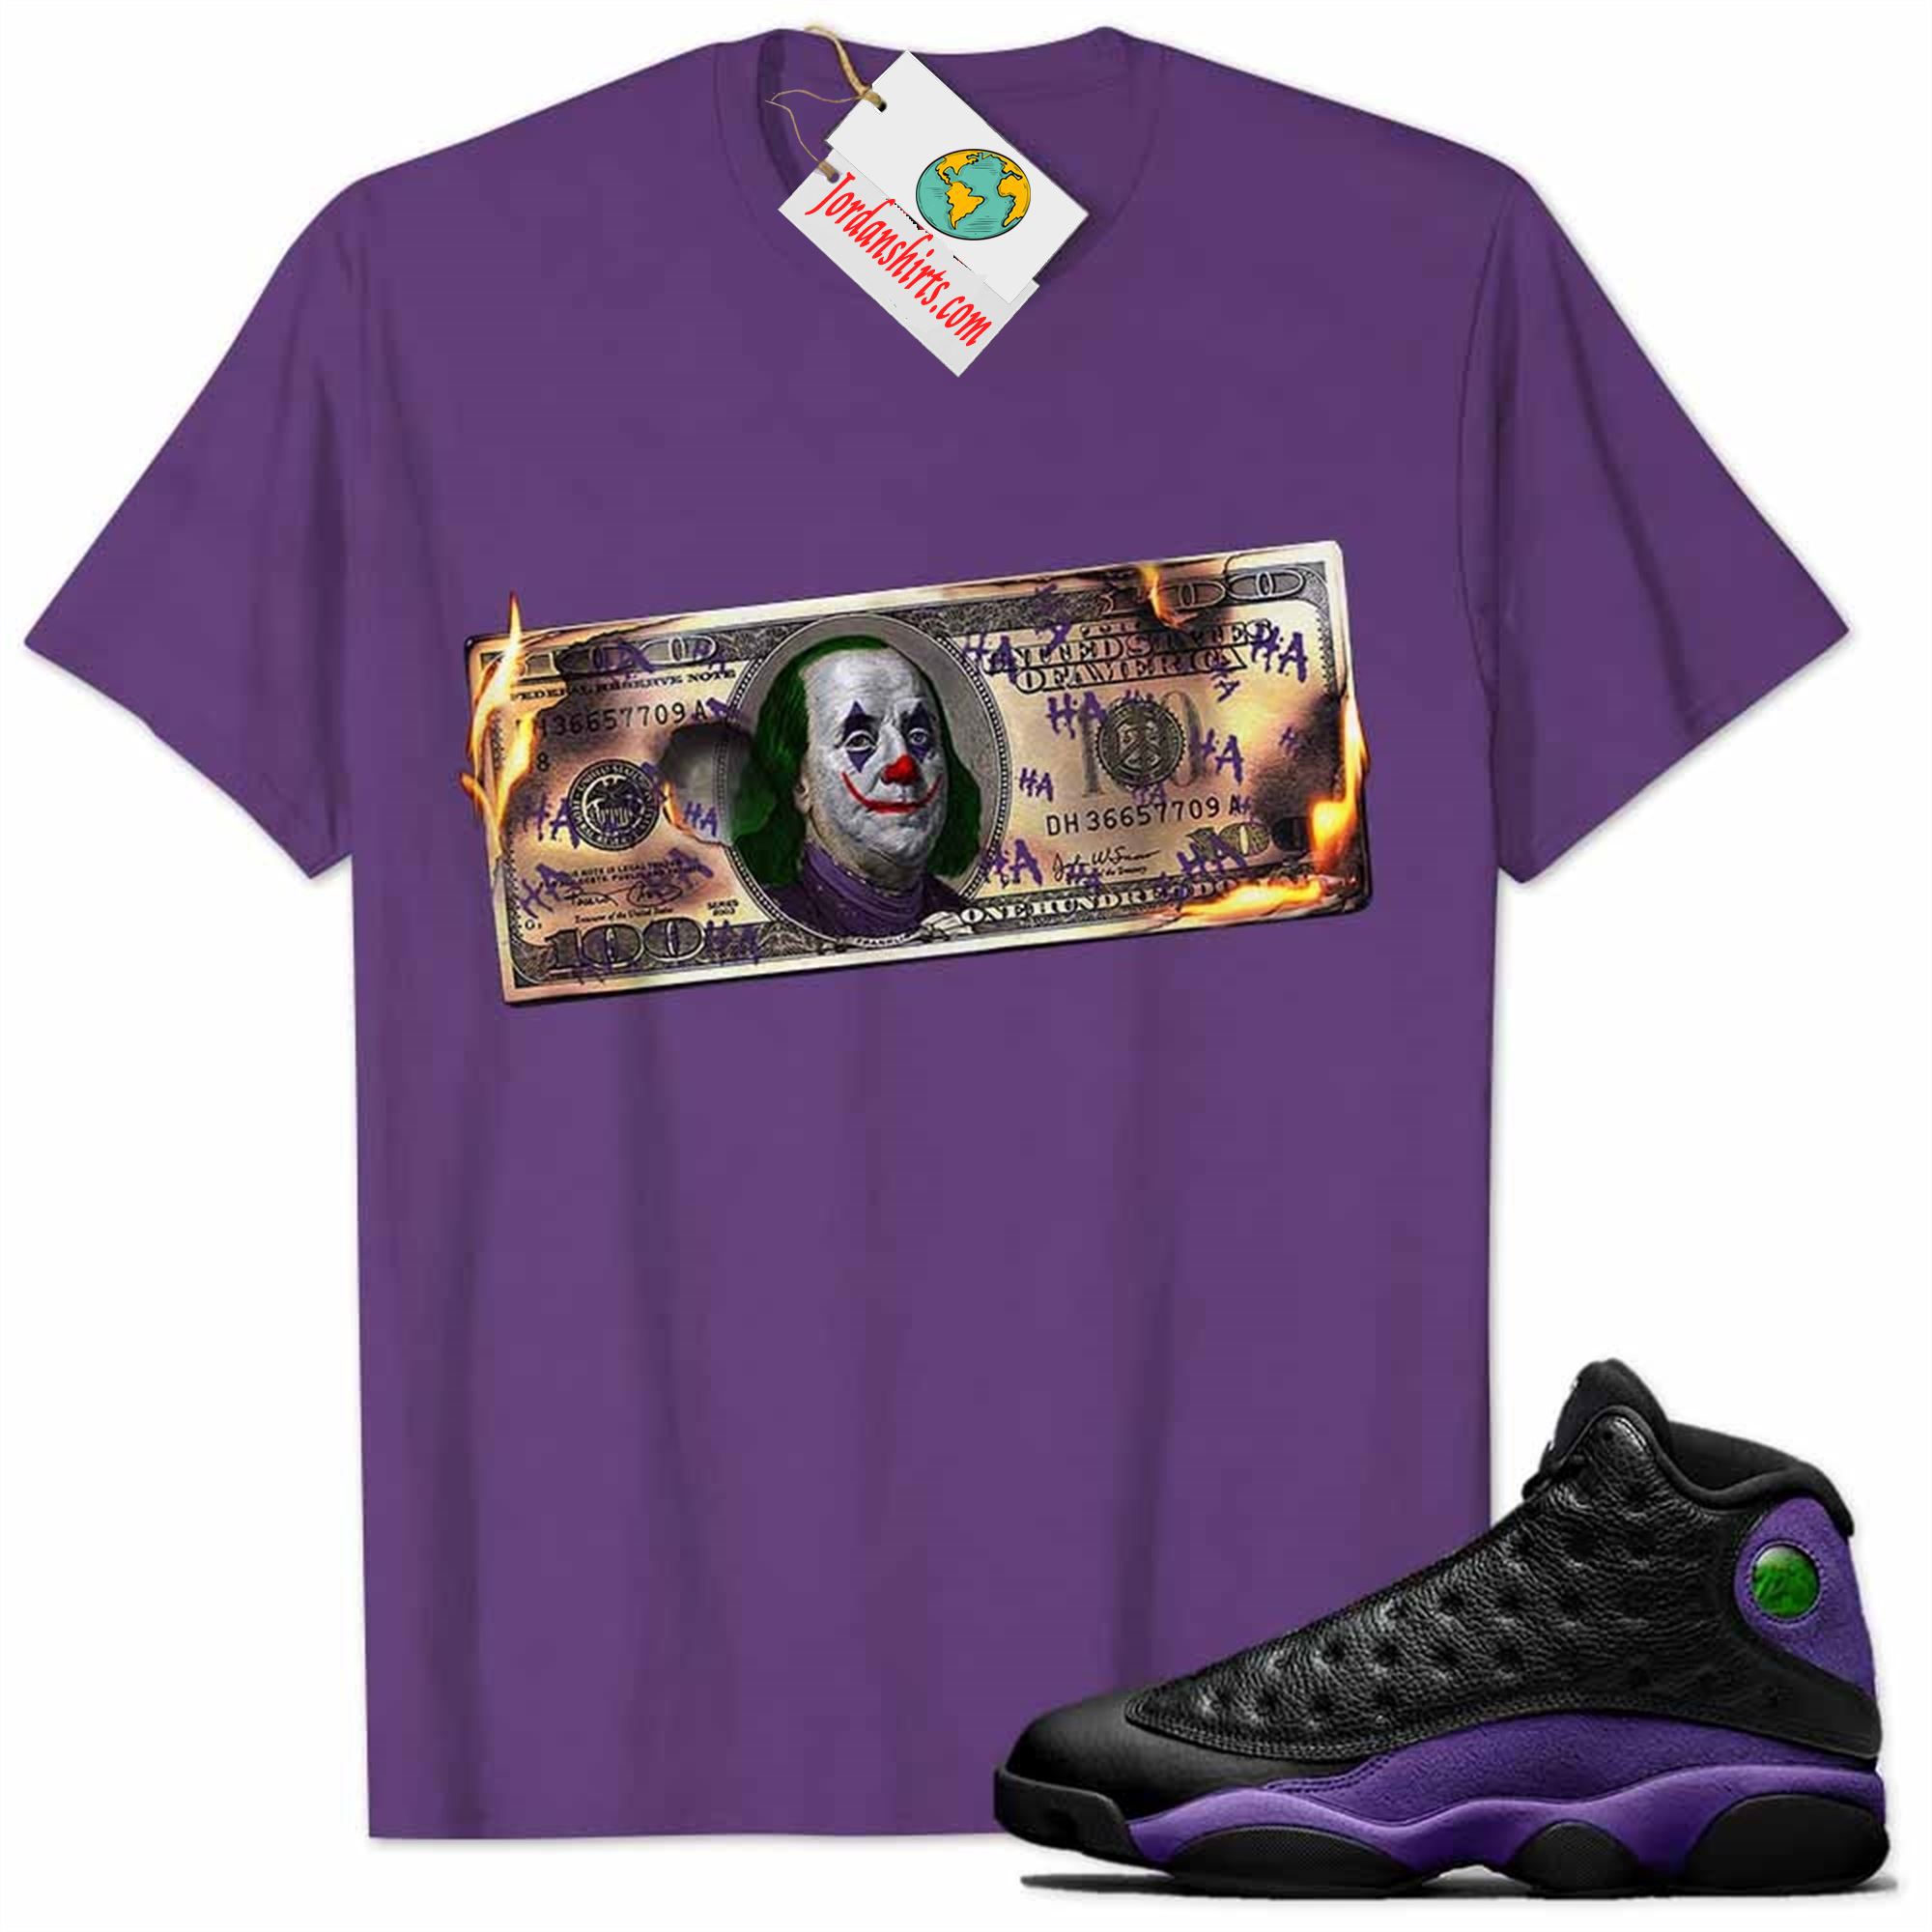 Jordan 13 Shirt, Ben Franklin Joker Dollar Burning Purple Air Jordan 13 Court Purple 13s Size Up To 5xl